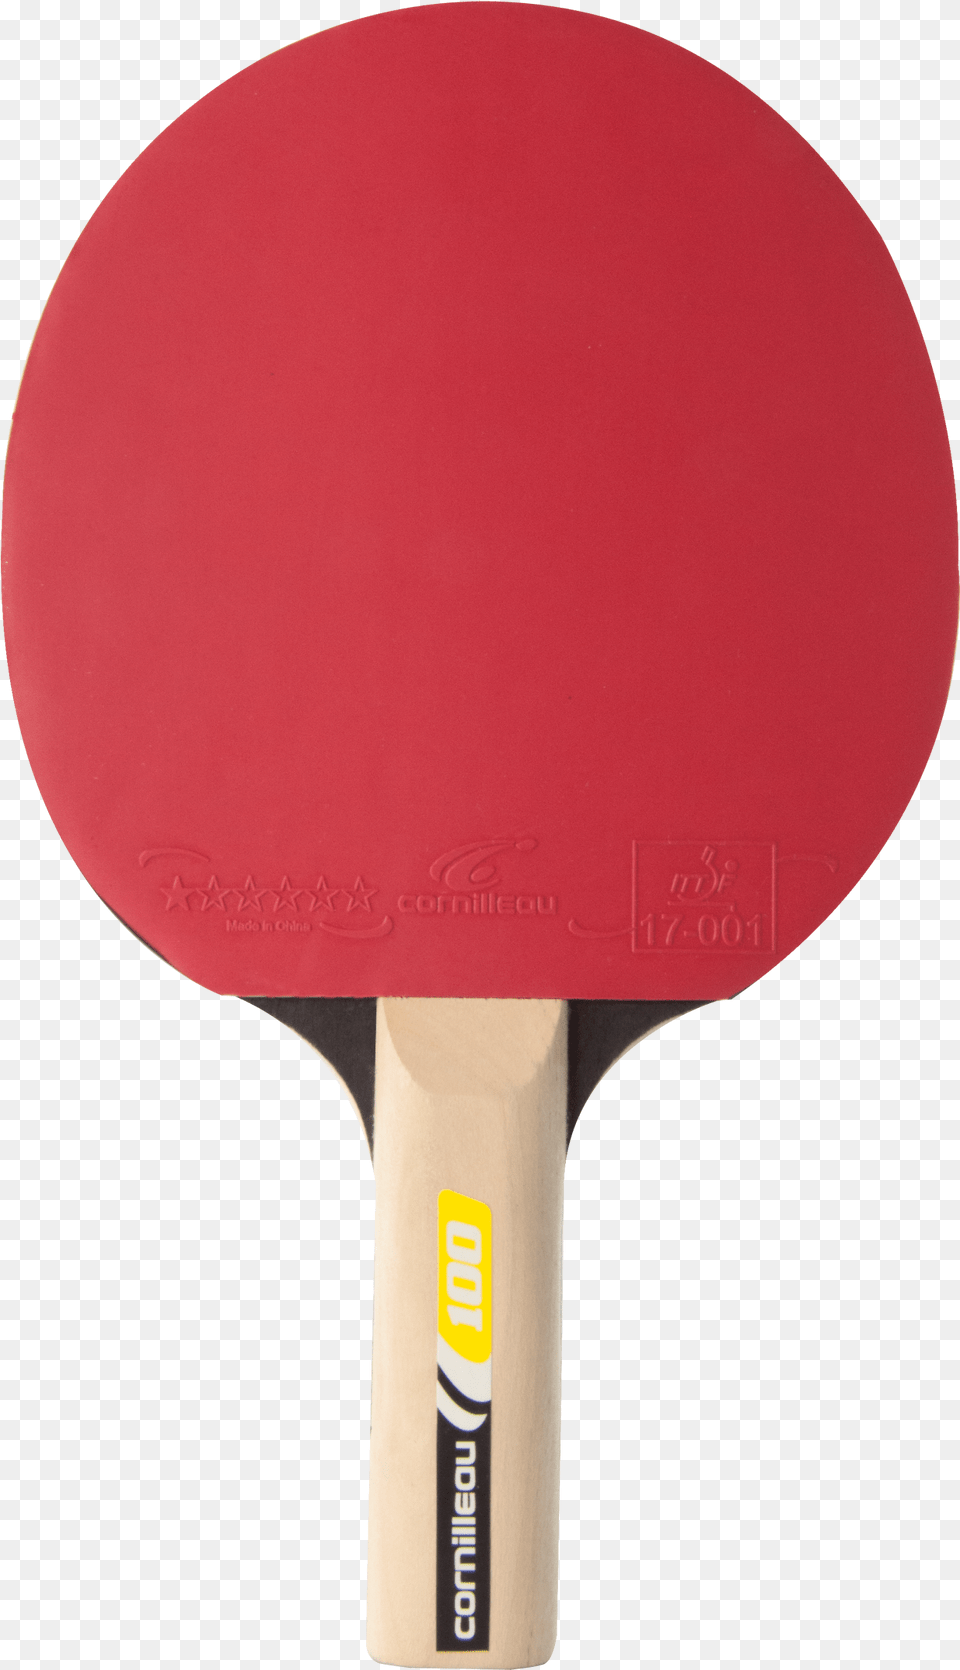 Table Tennis Bat By Cornilleau Cornilleau 100 Sport Table Tennis Bat, Racket, Ping Pong, Ping Pong Paddle, Tennis Racket Free Png